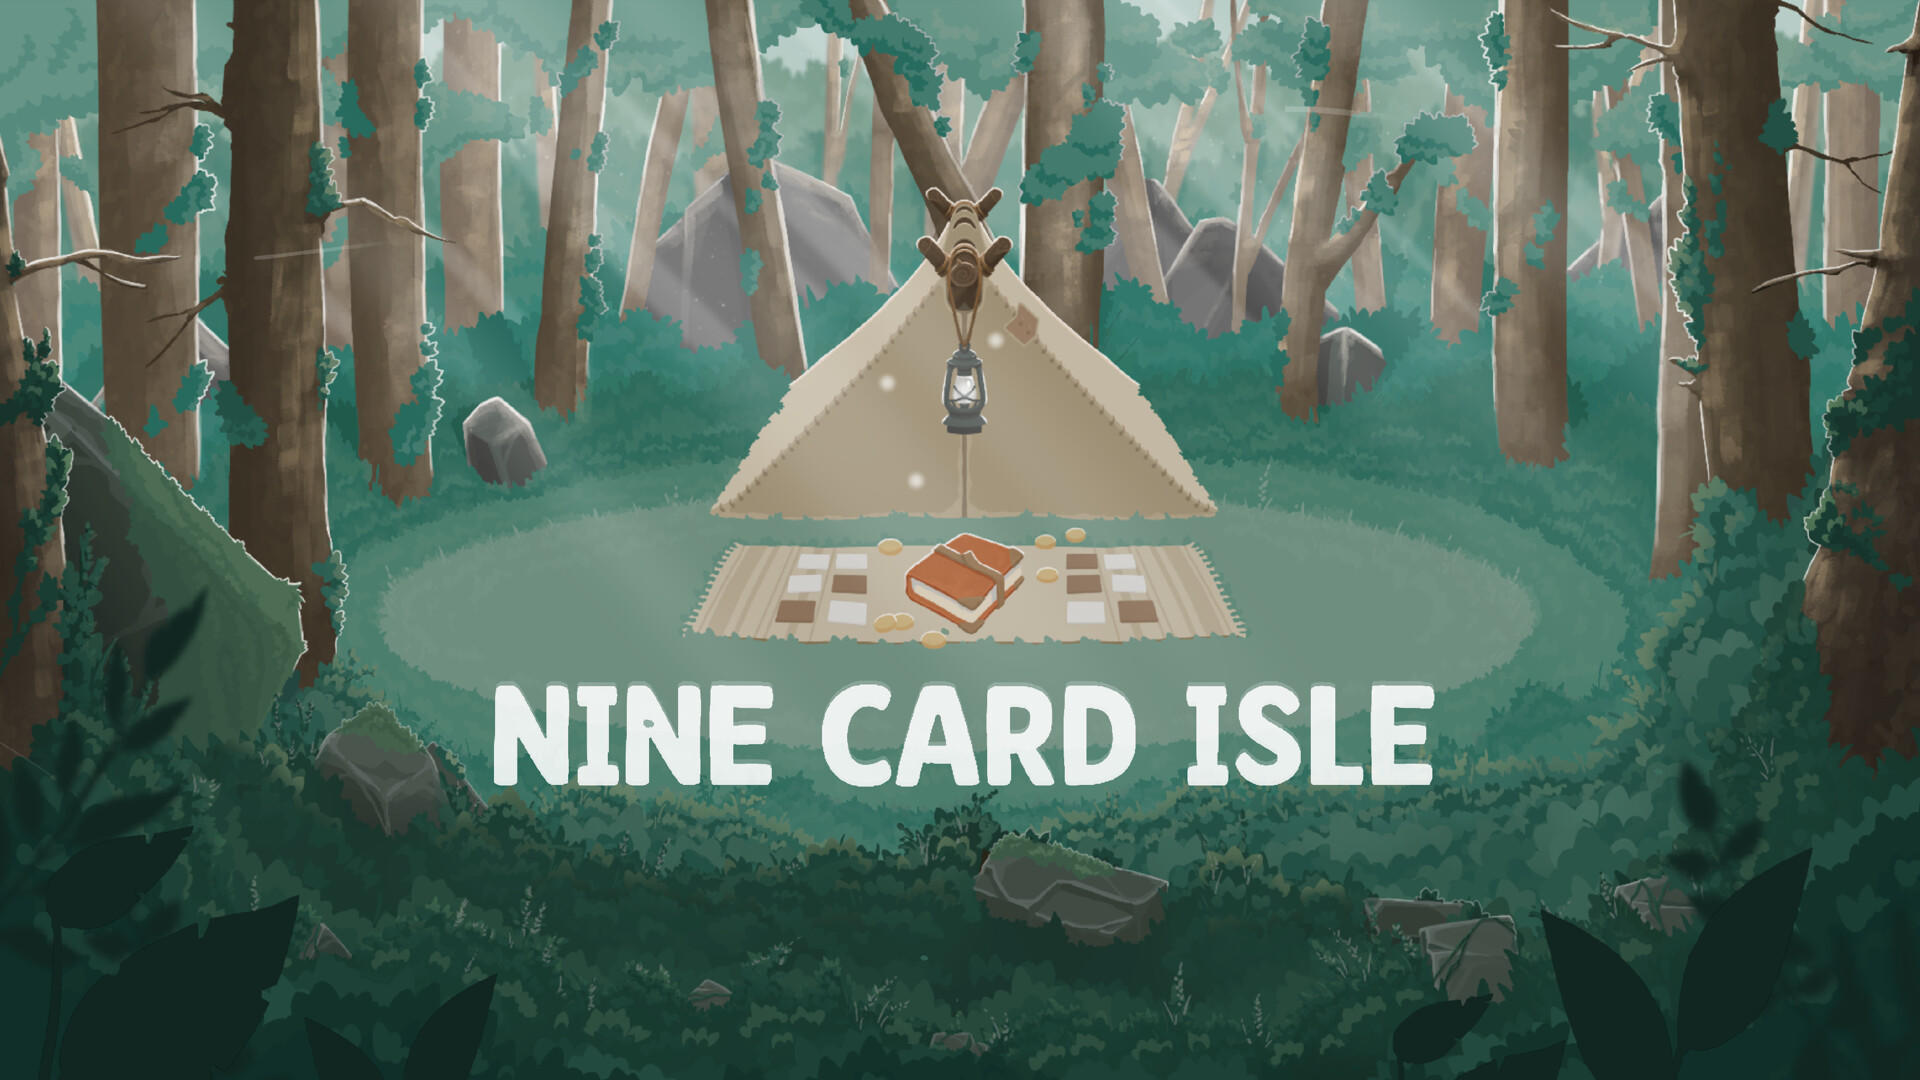 Screenshot 1 of Isla de nueve cartas 